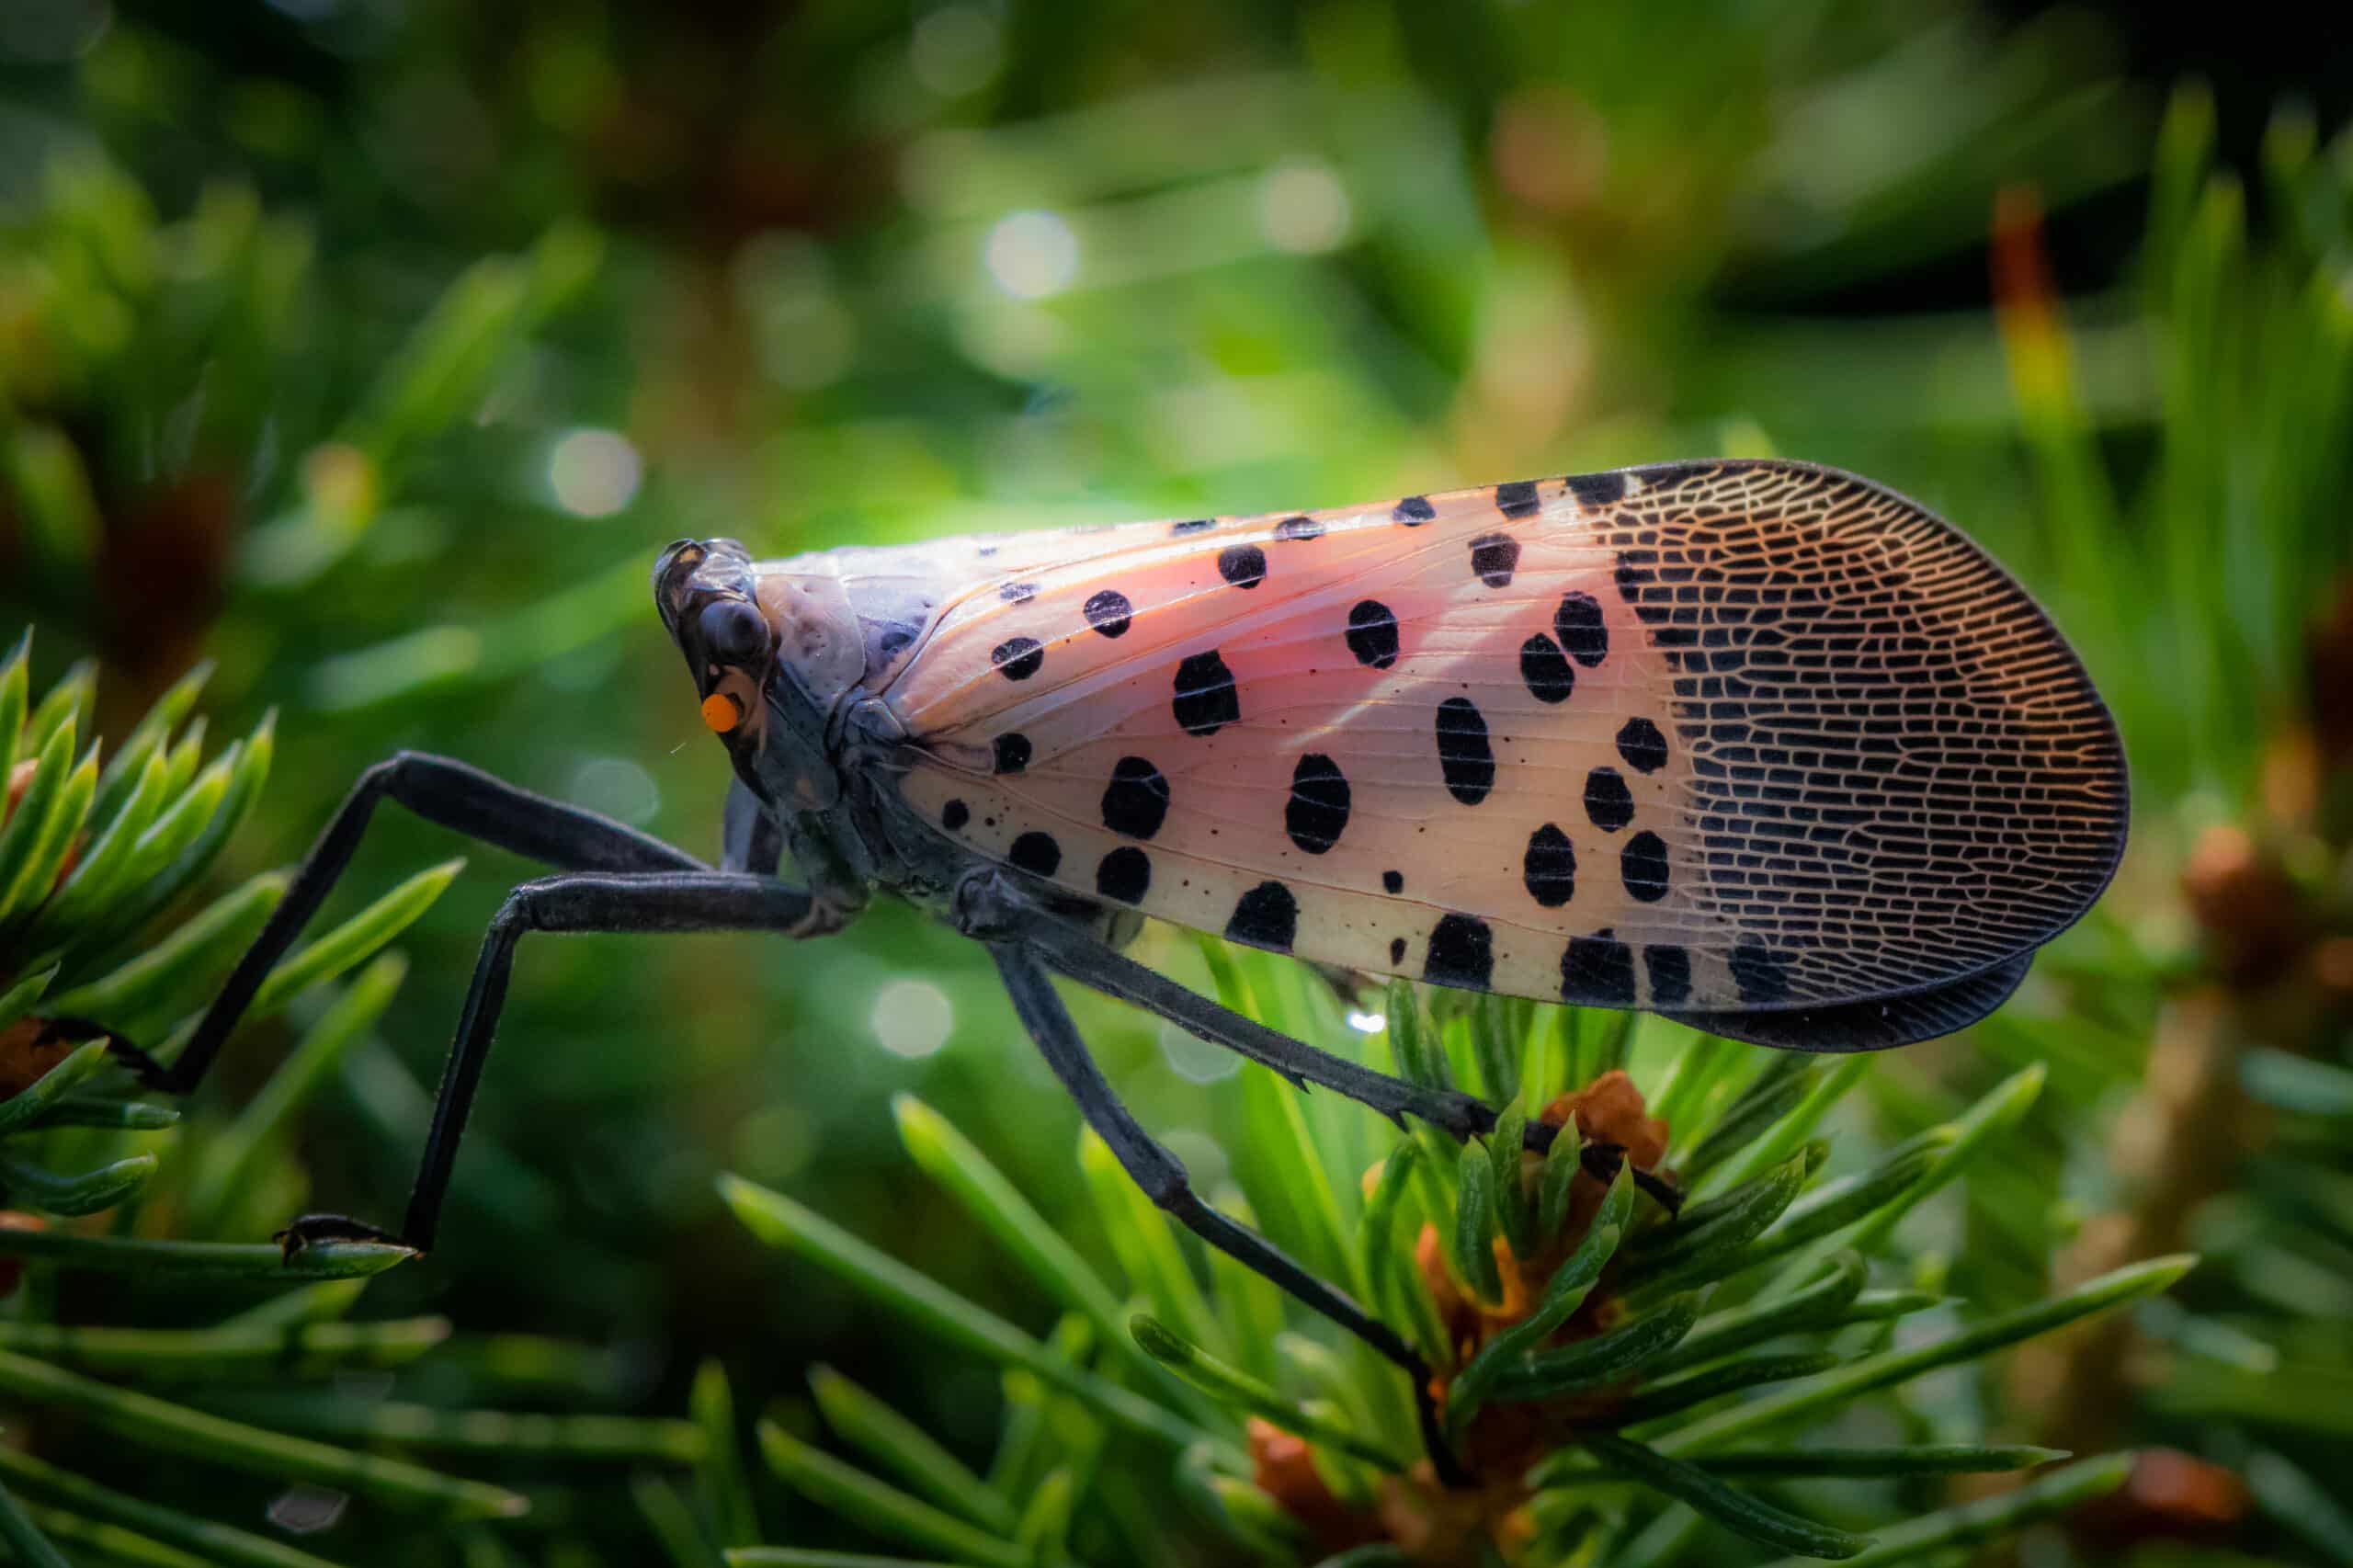 spotted lanternflies